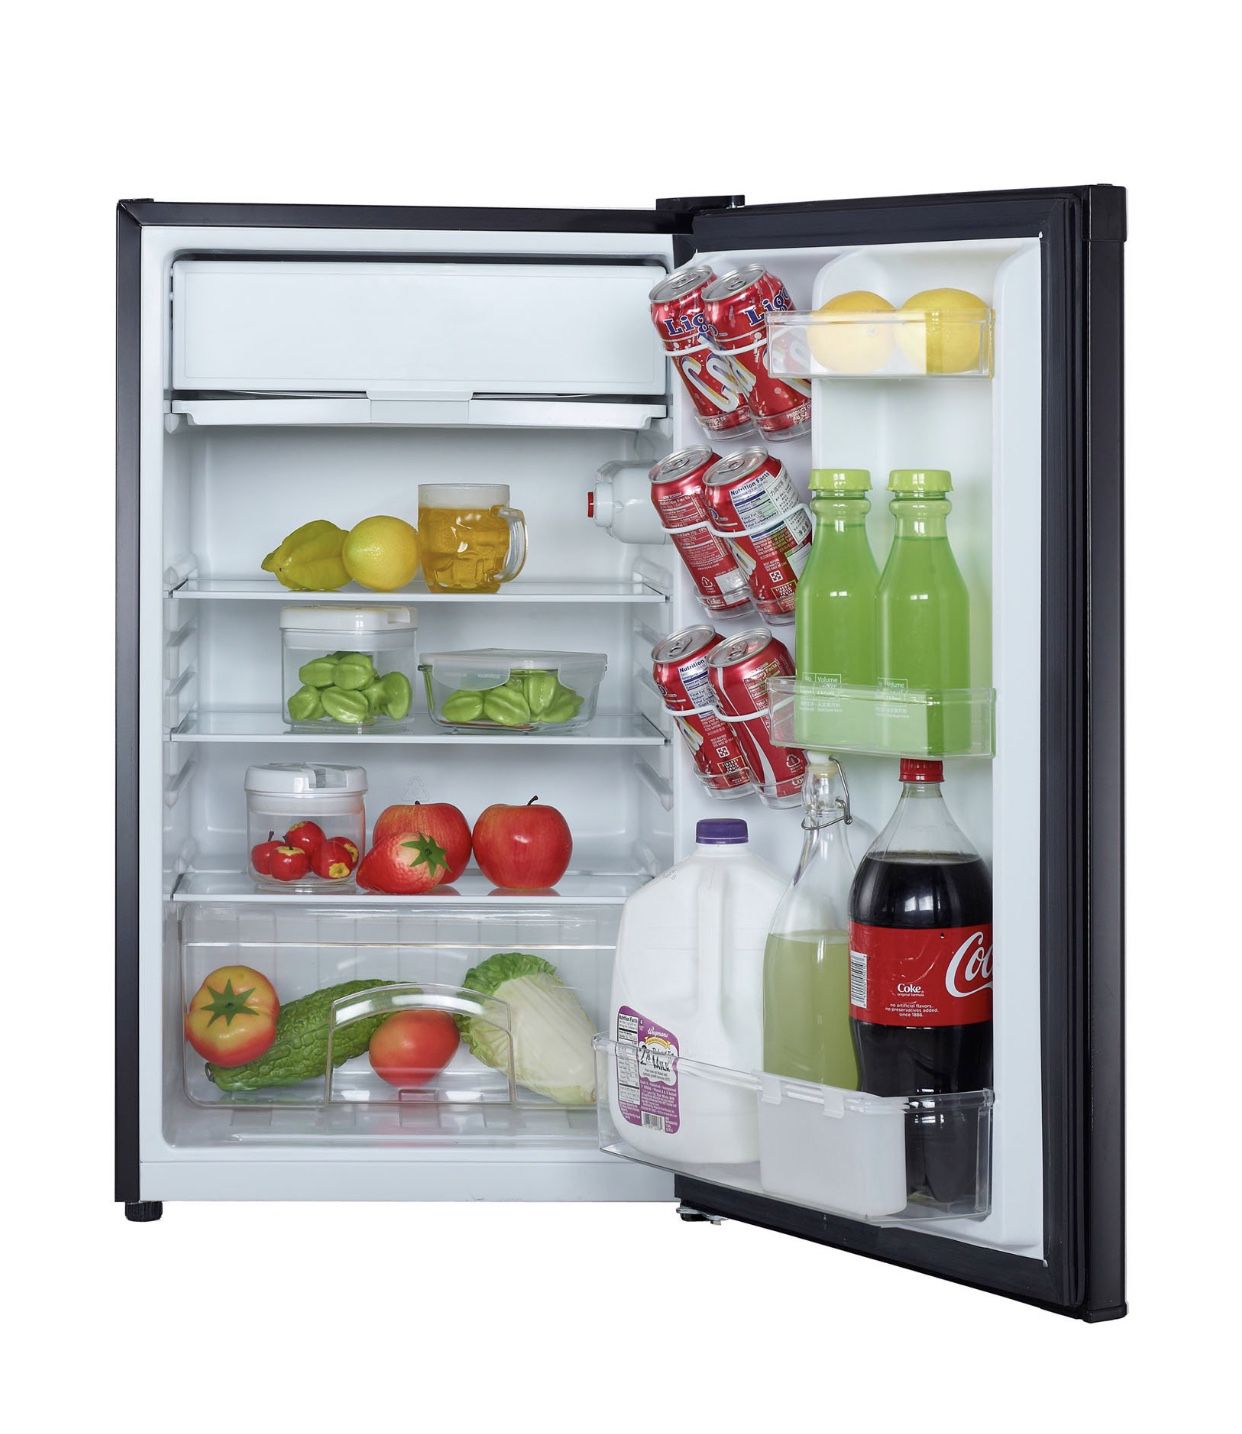 💫Brand New💫 Magic Chef 4.4 Cu ft Mini Refrigerator with Freezer MCBR440B2, Black